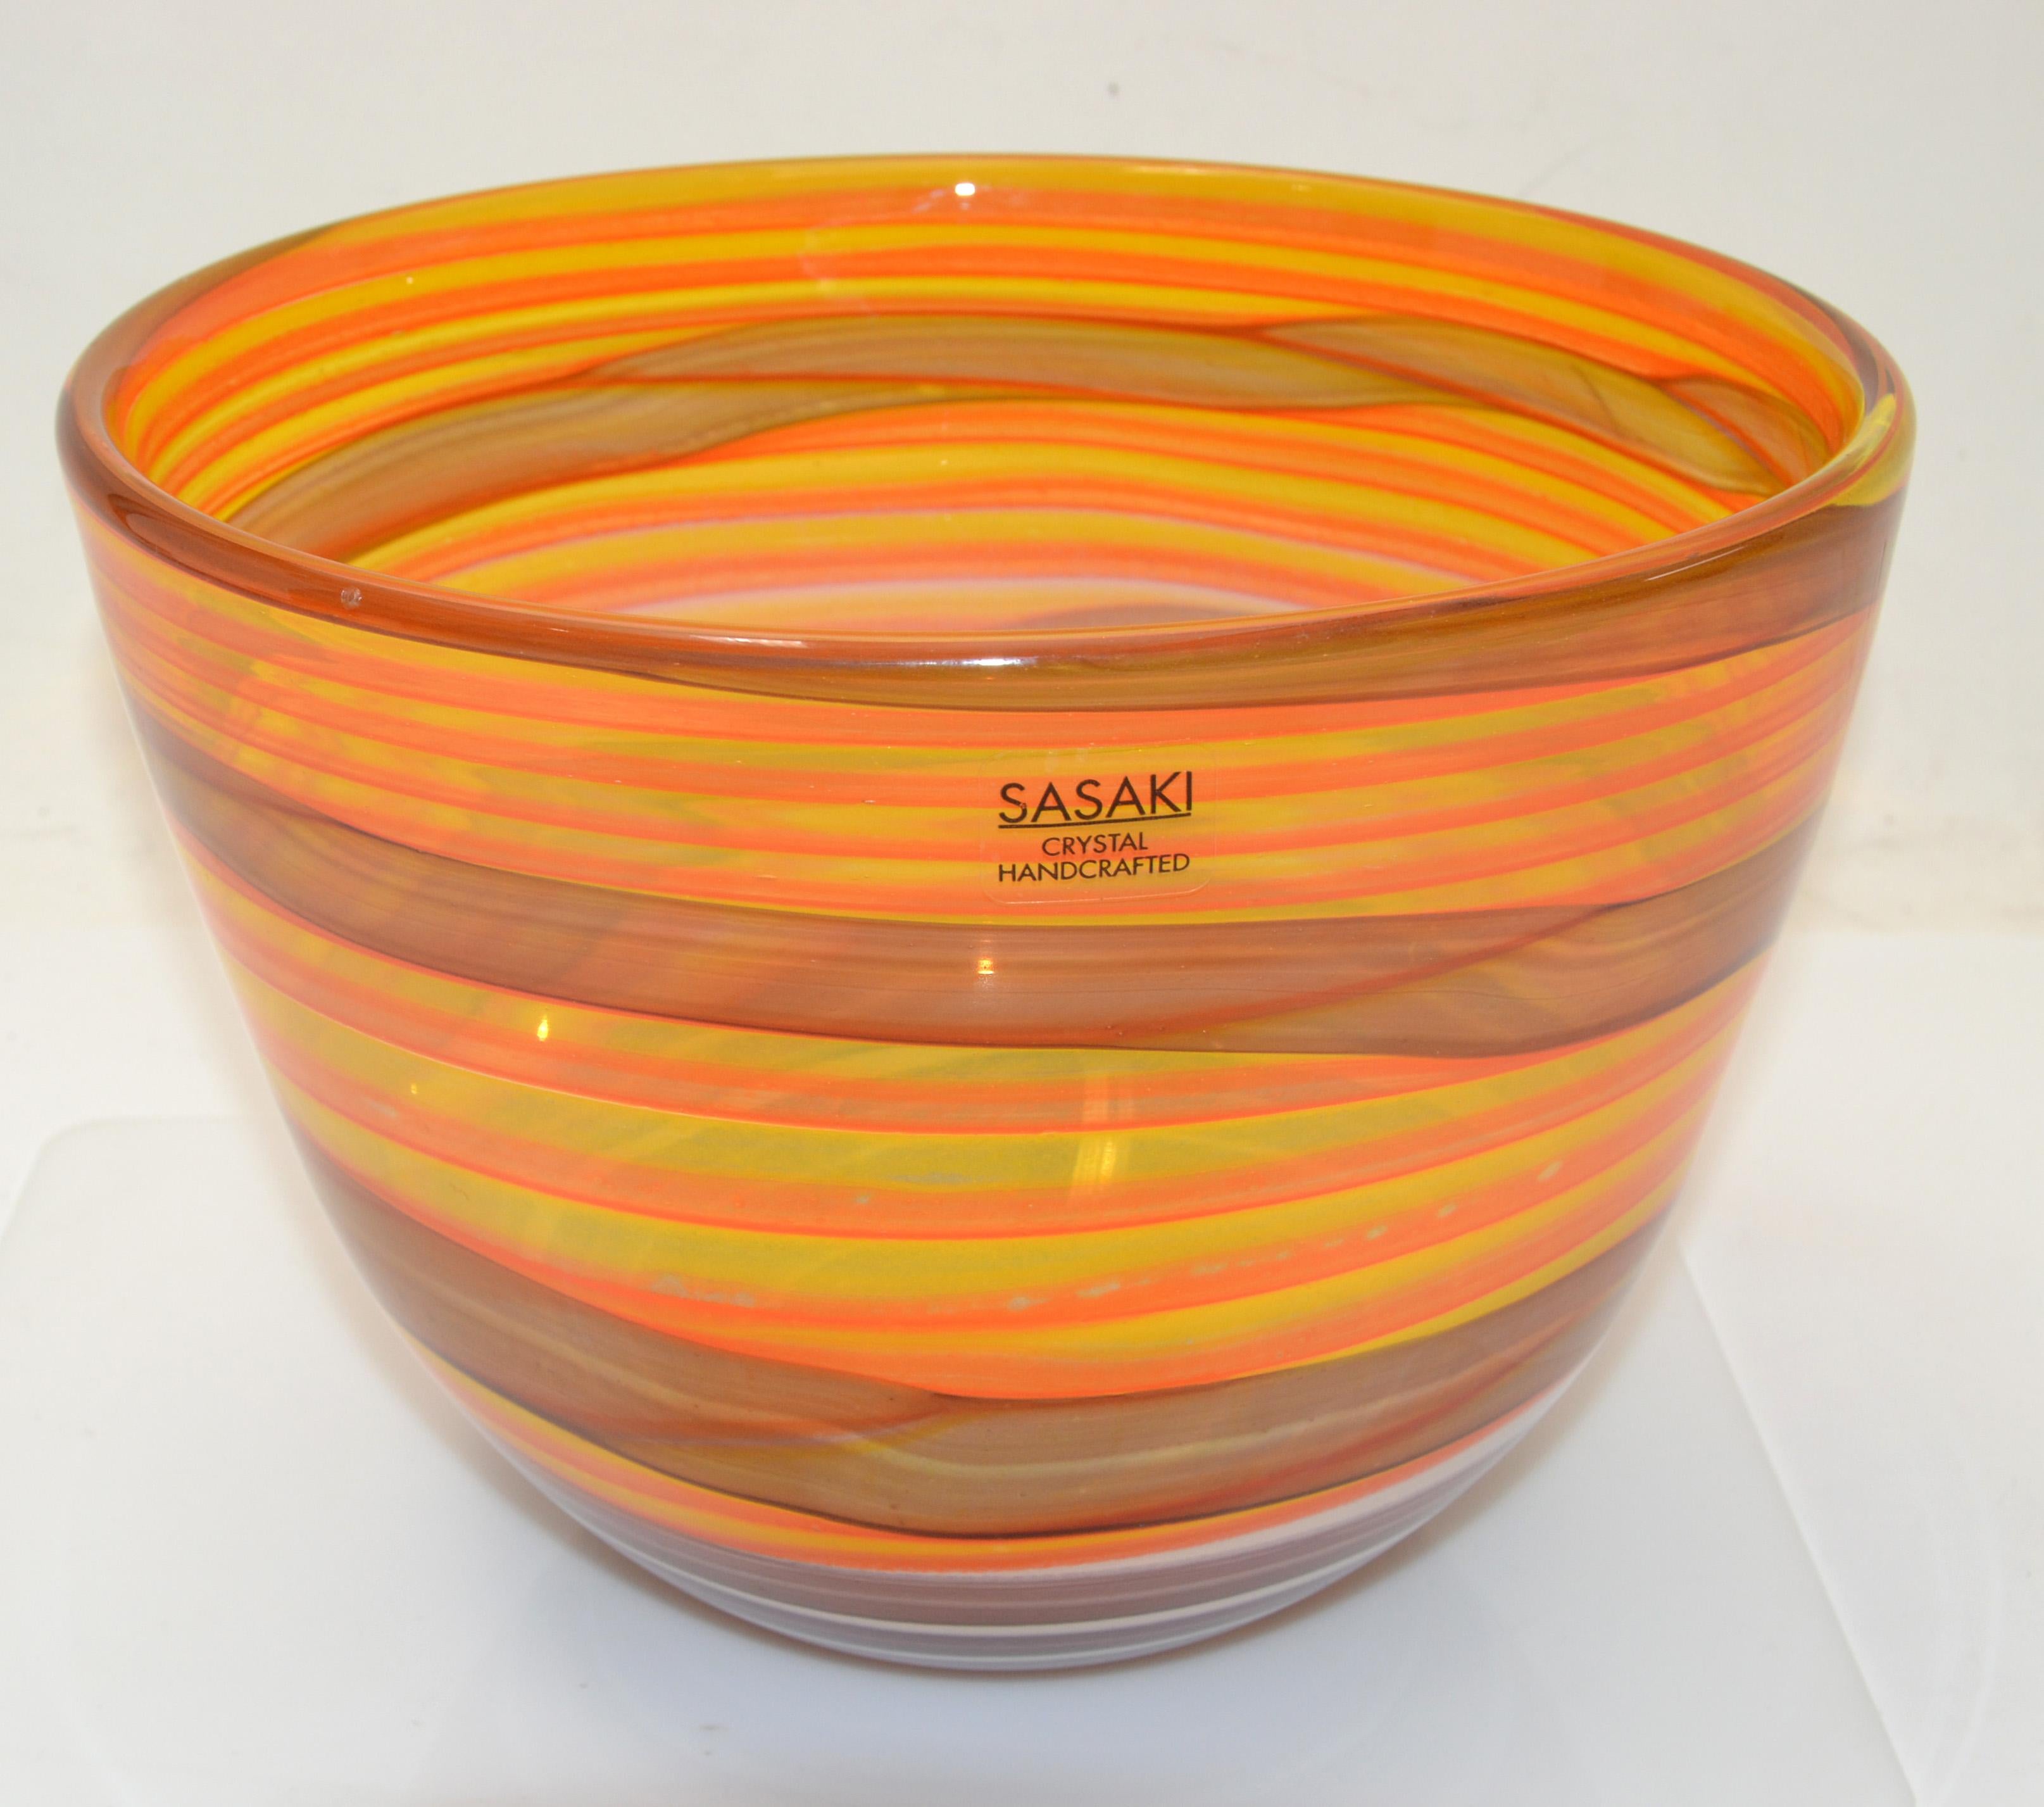 Sasaki Sengai Japan Orange Swirl Crystal Bowl Handcrafted Mid-Century Modern 80 For Sale 3